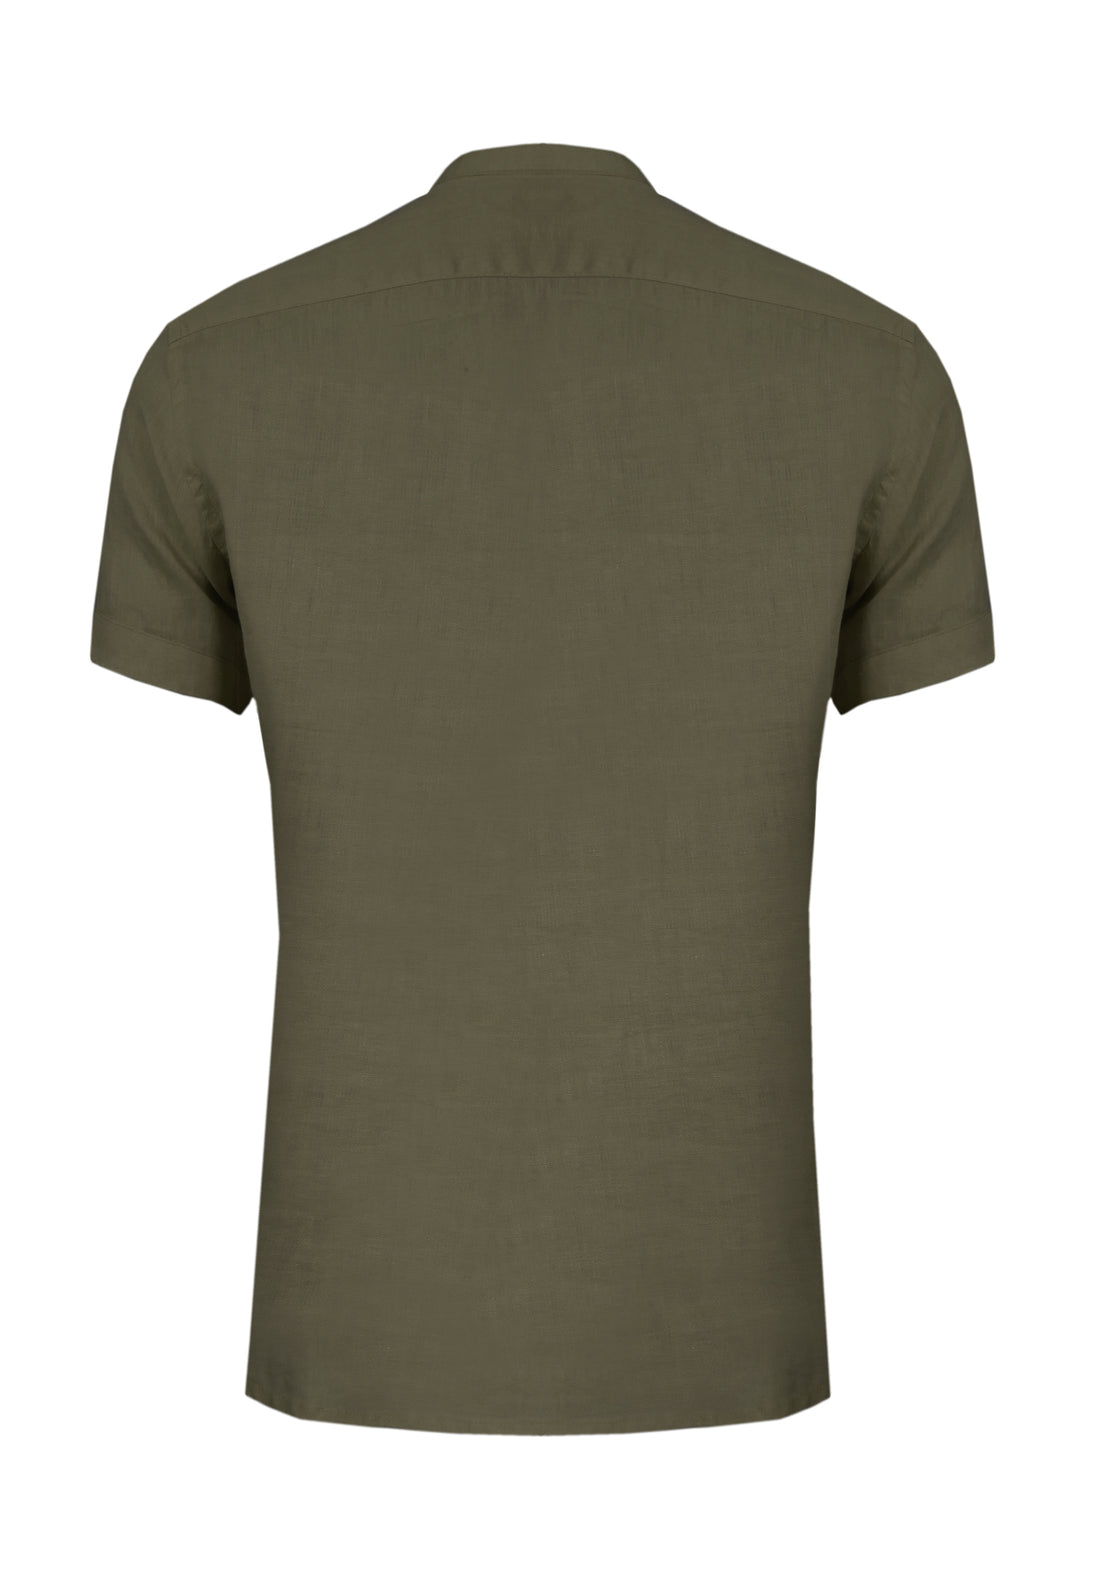 Half Sleeve Korean Linen Shirt - Military